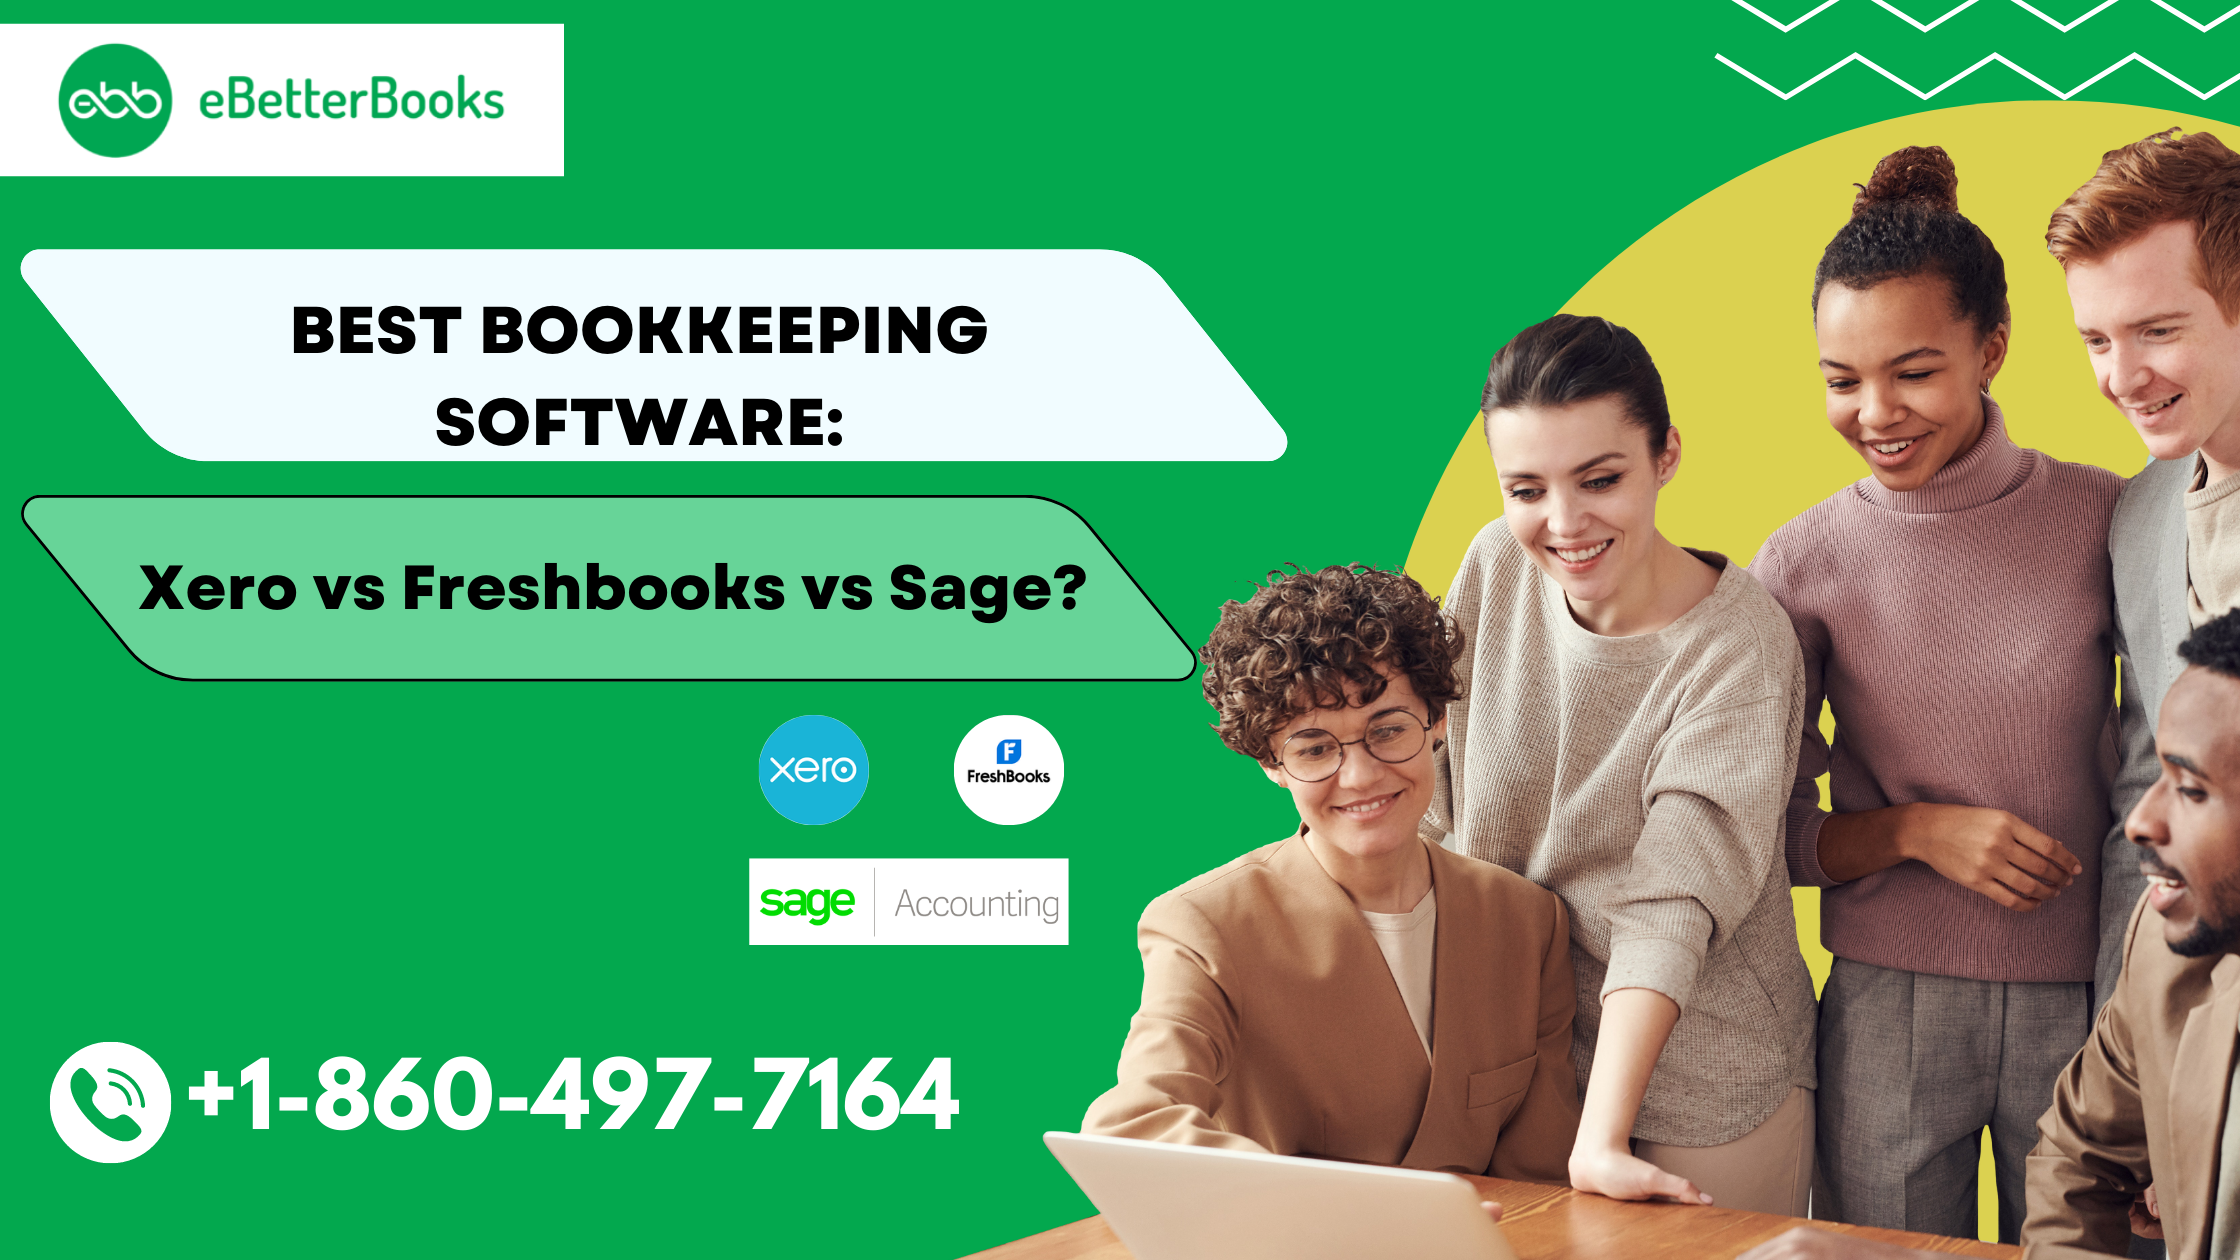 Xero vs Freshbooks vs Sage accounting software